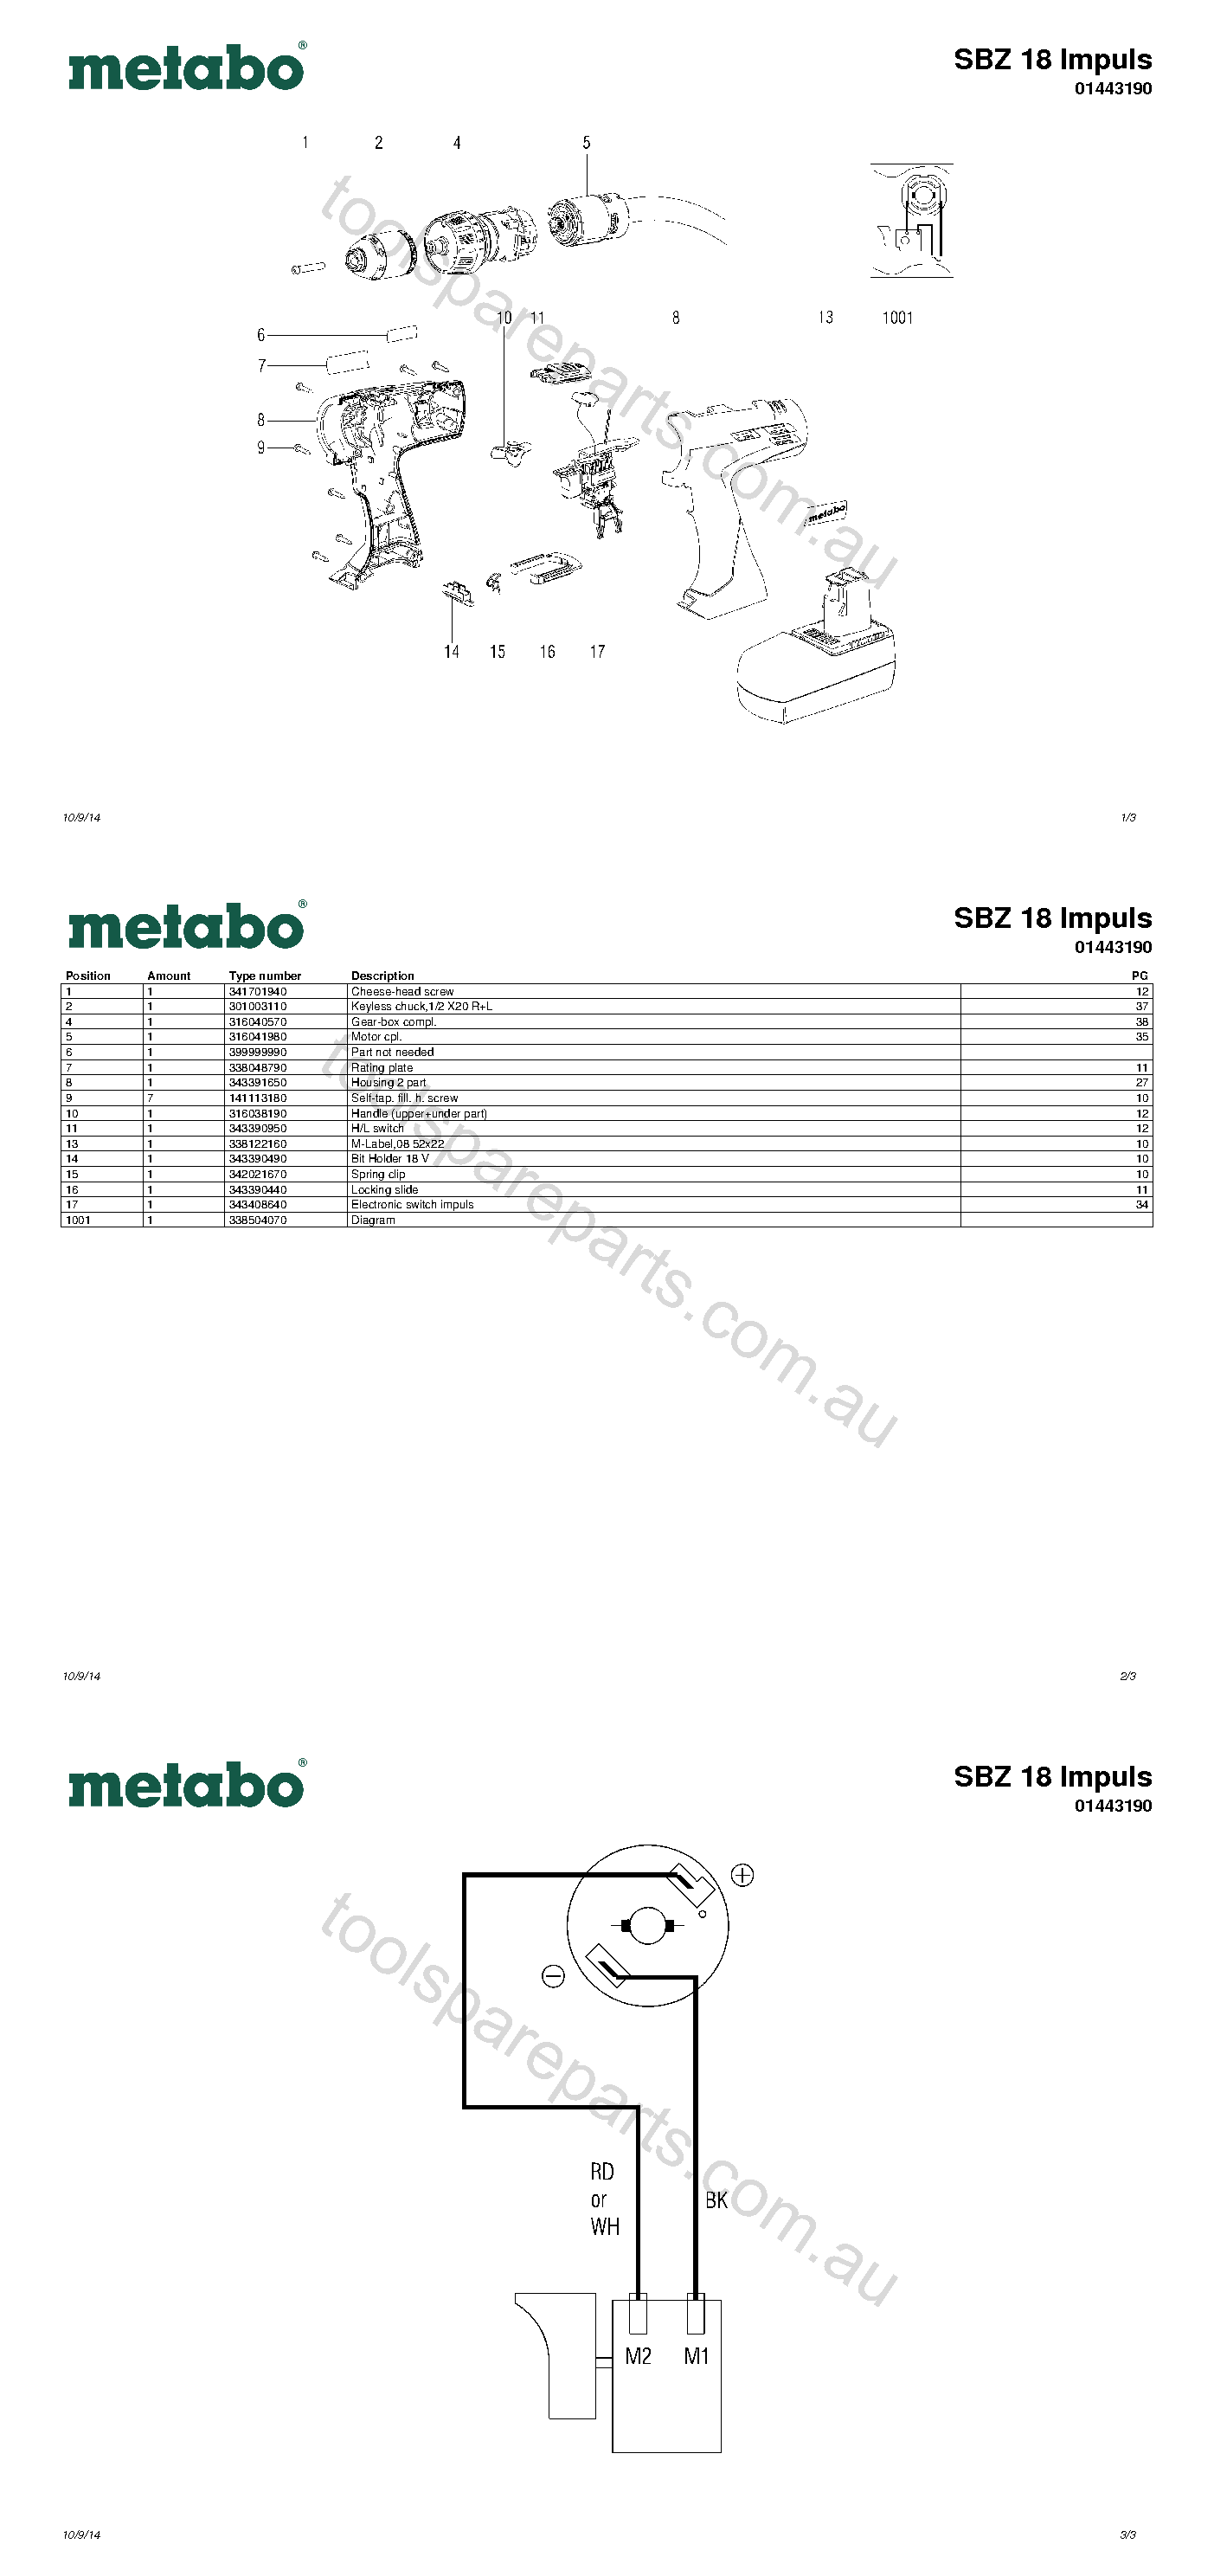 Metabo SBZ 18 Impuls 01443190  Diagram 1